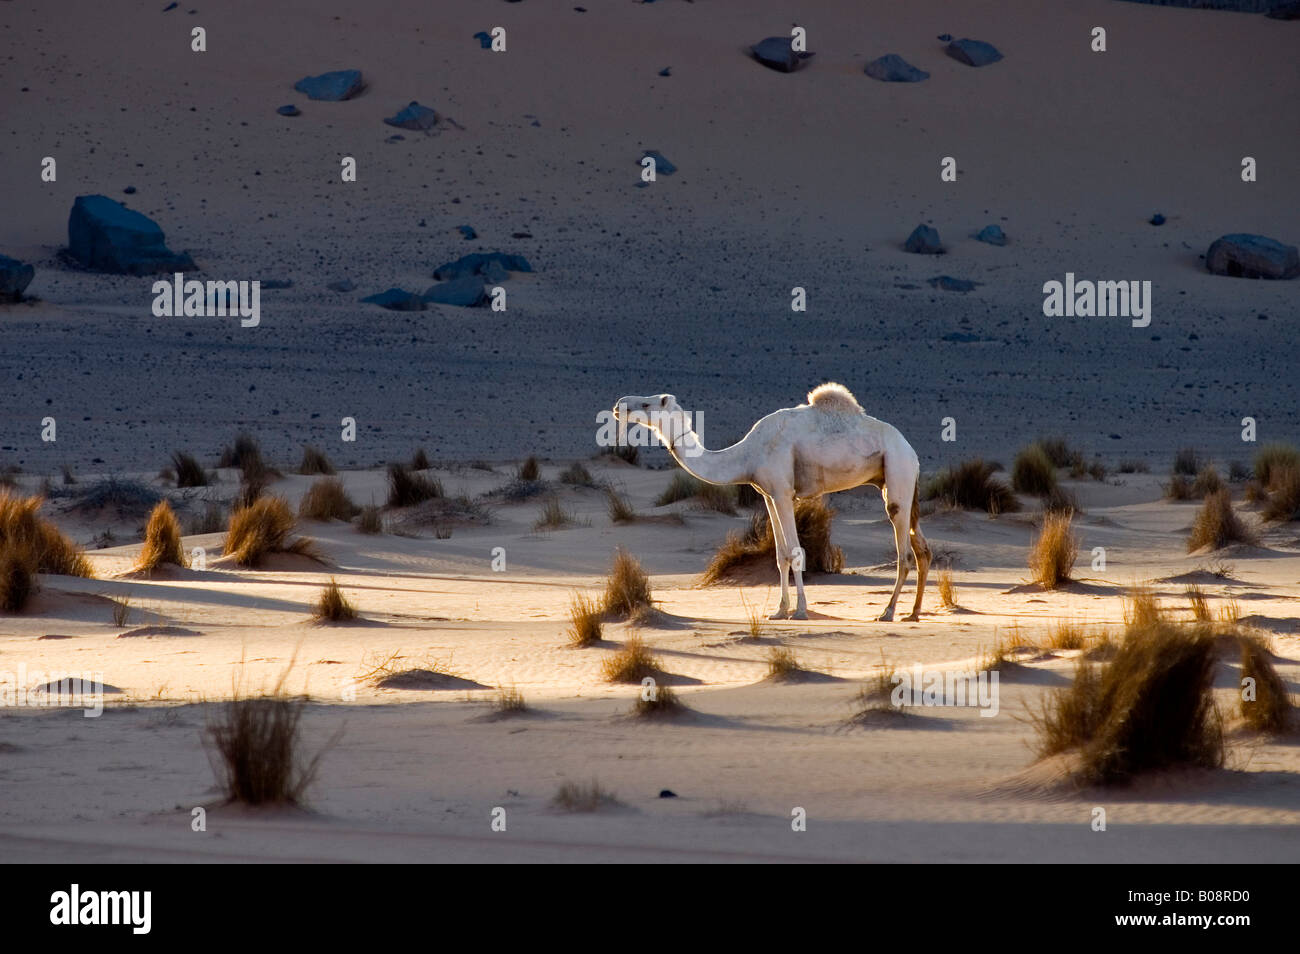 Lone white camel (Camelus dromedarius) in evening light in the desert sands of Libya, North Africa Stock Photo